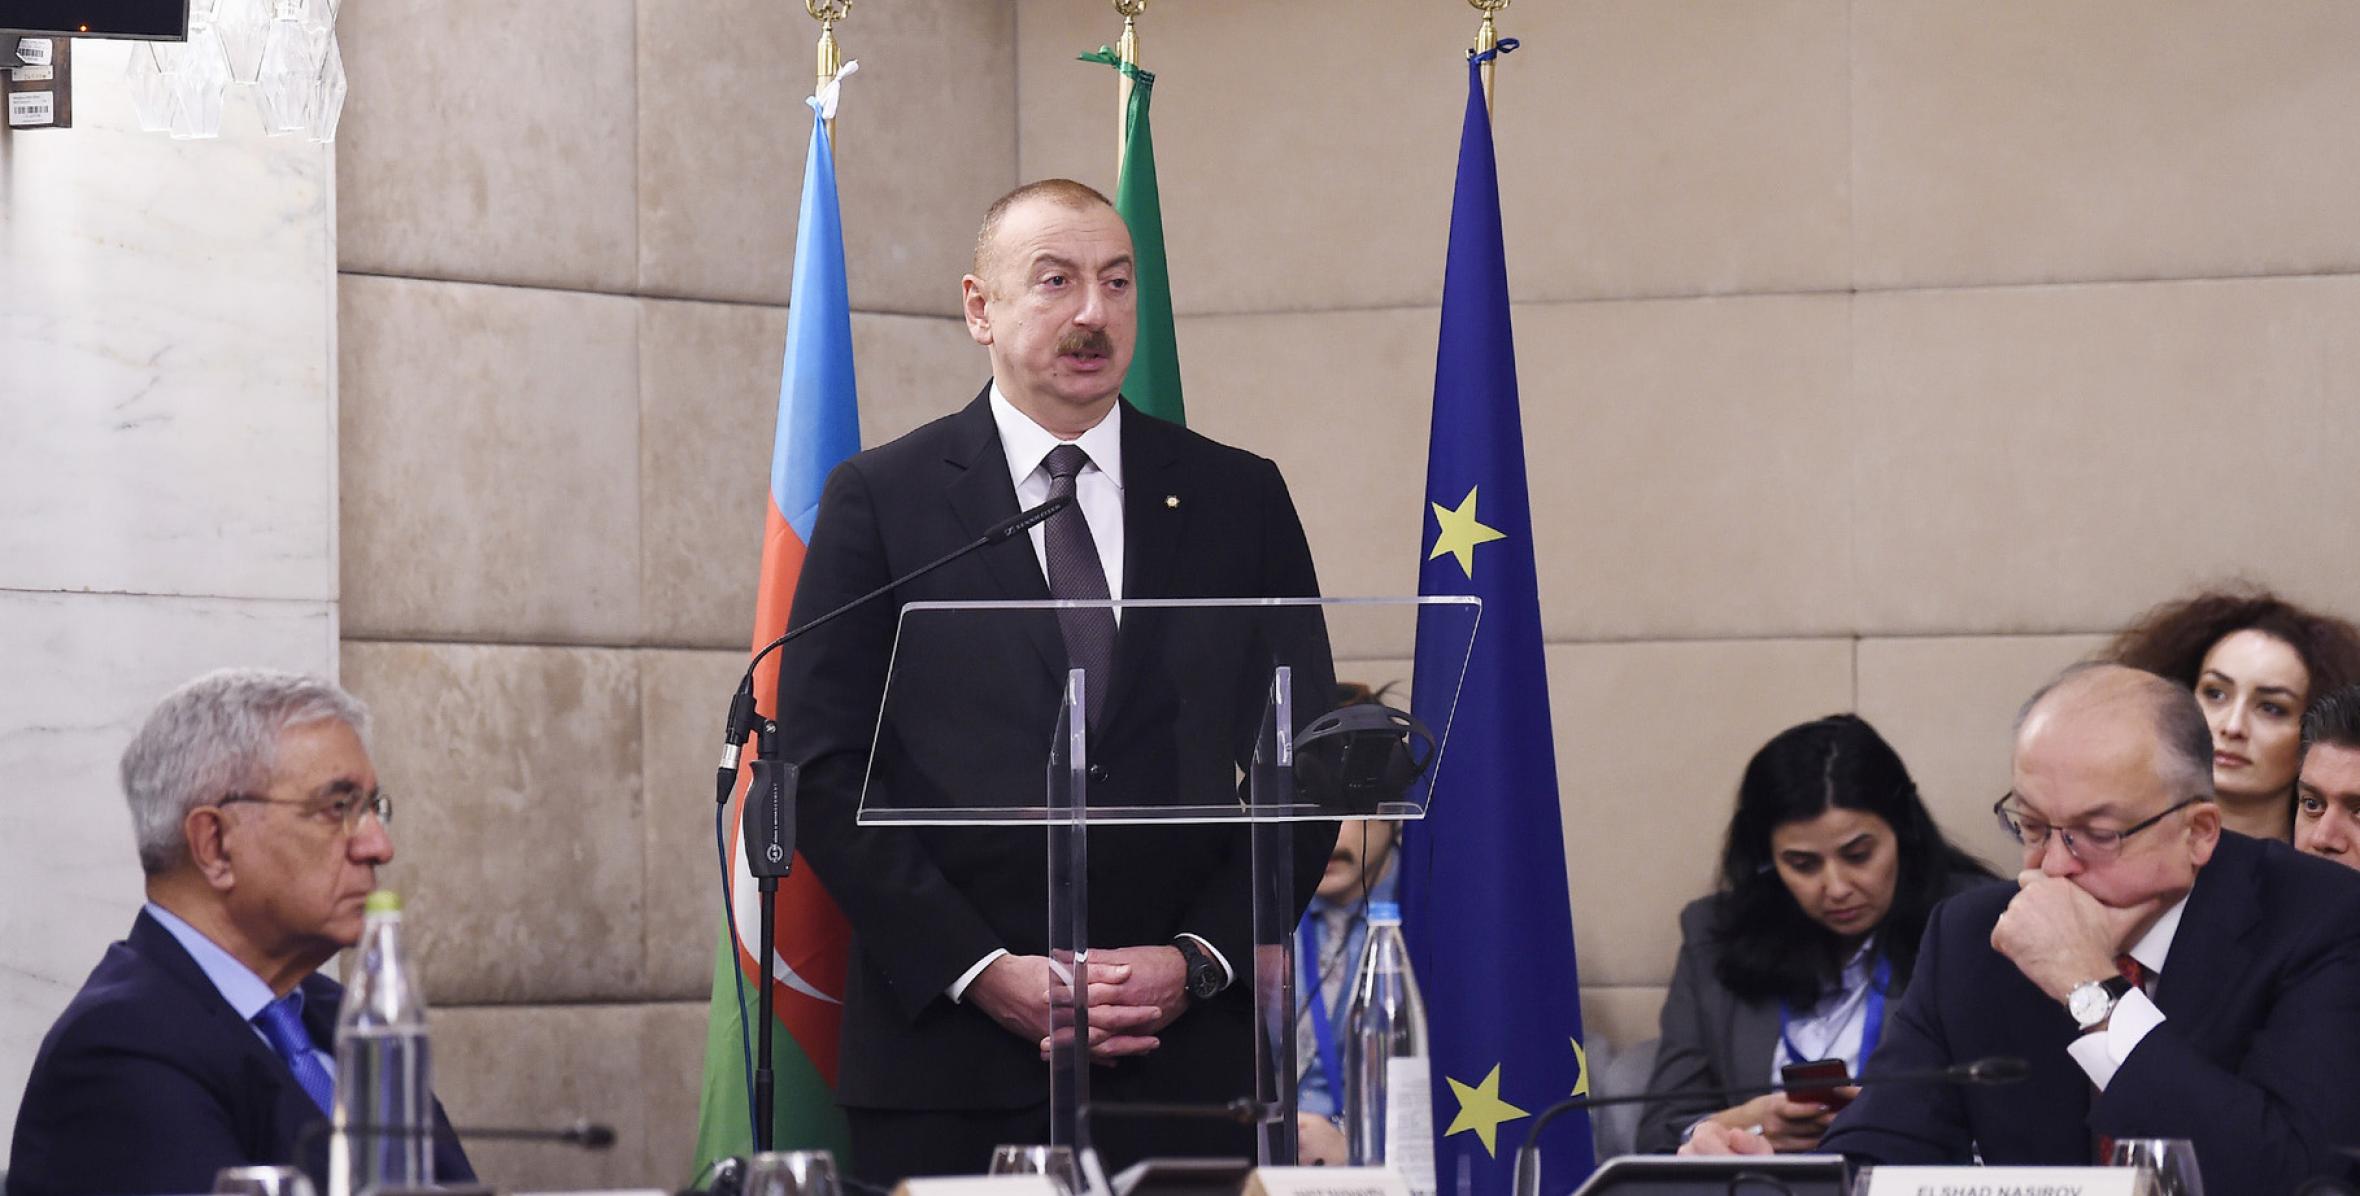 Speech by Ilham Aliyev at the Azerbaijan-Italy business forum